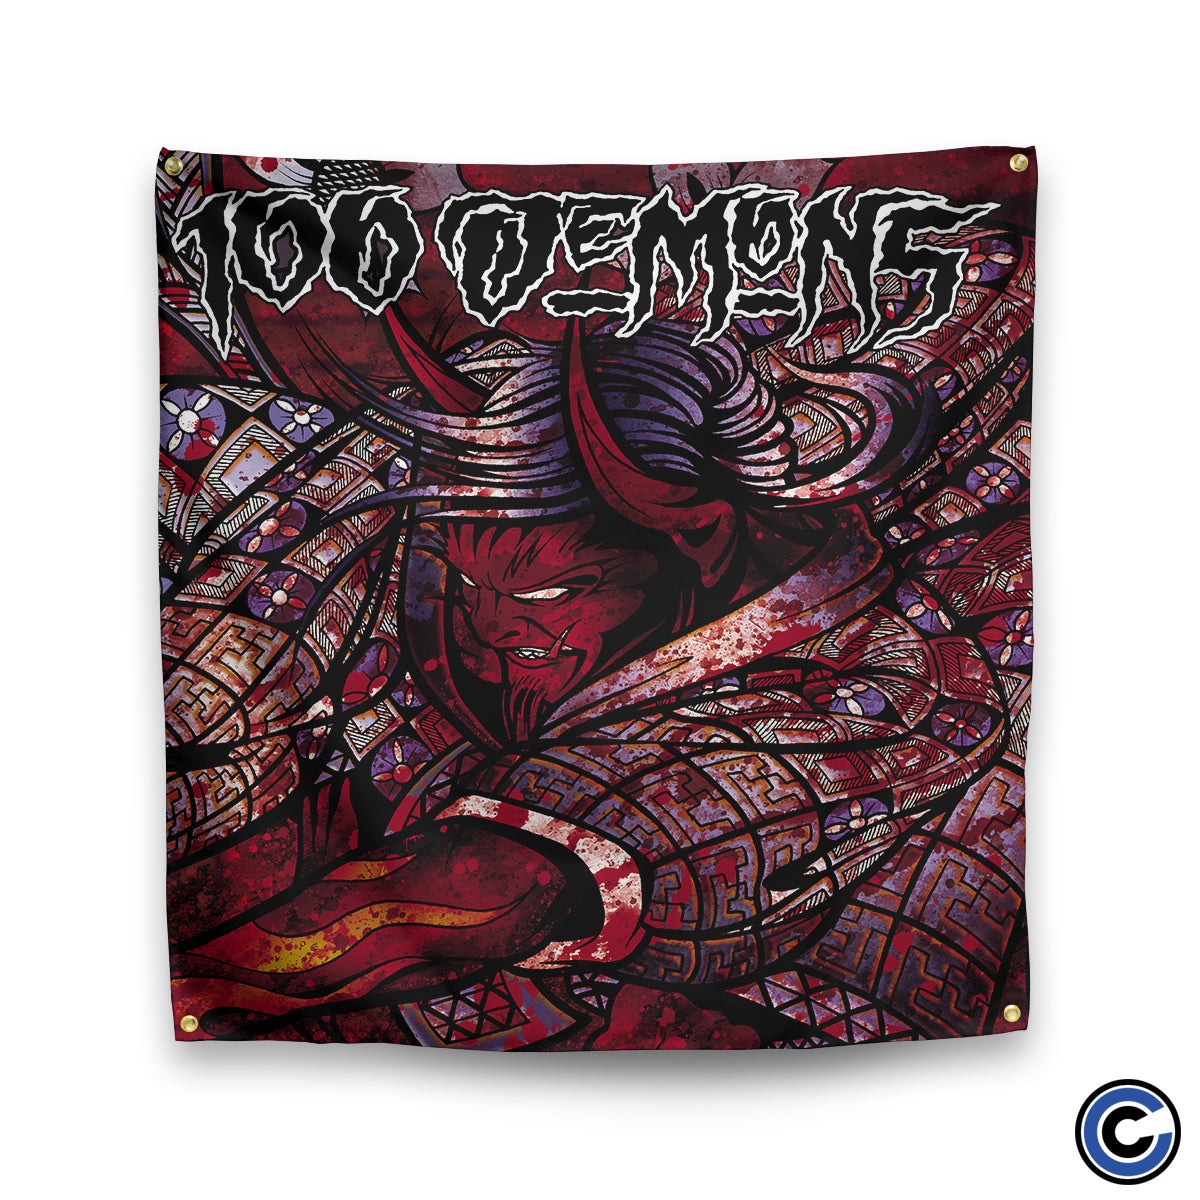 100 Demons "Self Titled" Flag